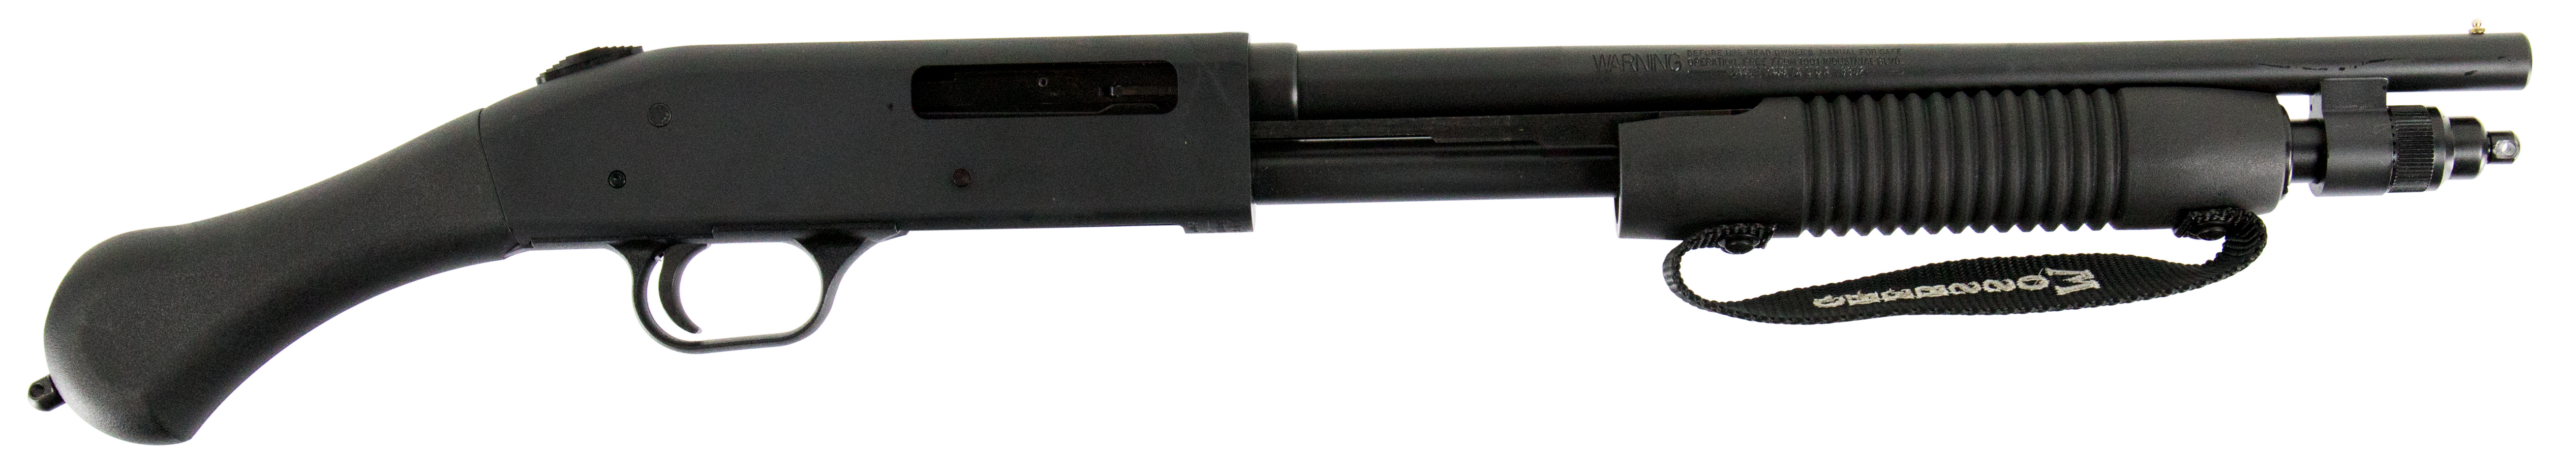 https://cityarsenal.com/product/mossberg-590-shockwave-pump-action-shotgun-410-gauge-51-14-375in-heavy-barrel-blued-metal-finish-50649/